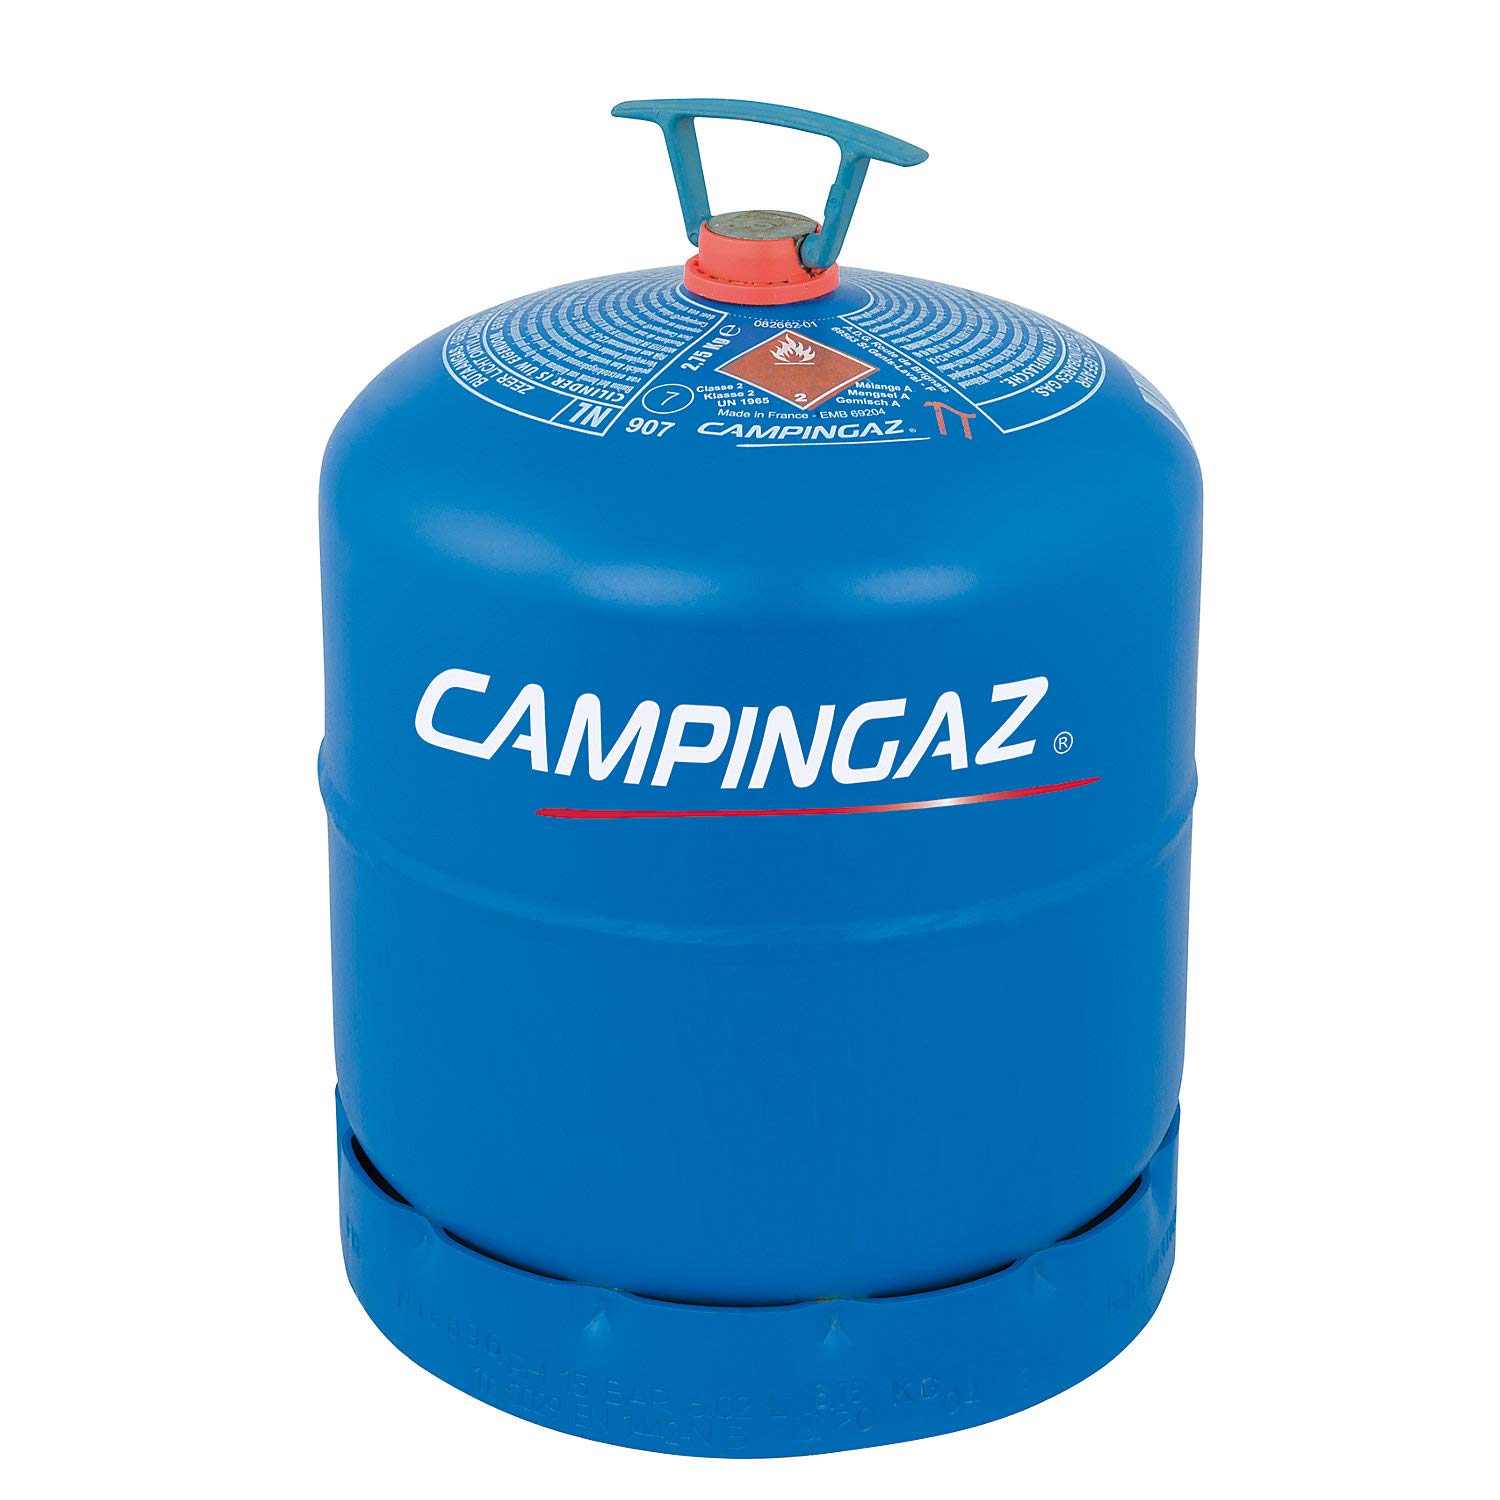 Campingaz Flasche 907 gefüllt Gasflasche, 2,75kg Butangasflasche von Campingaz